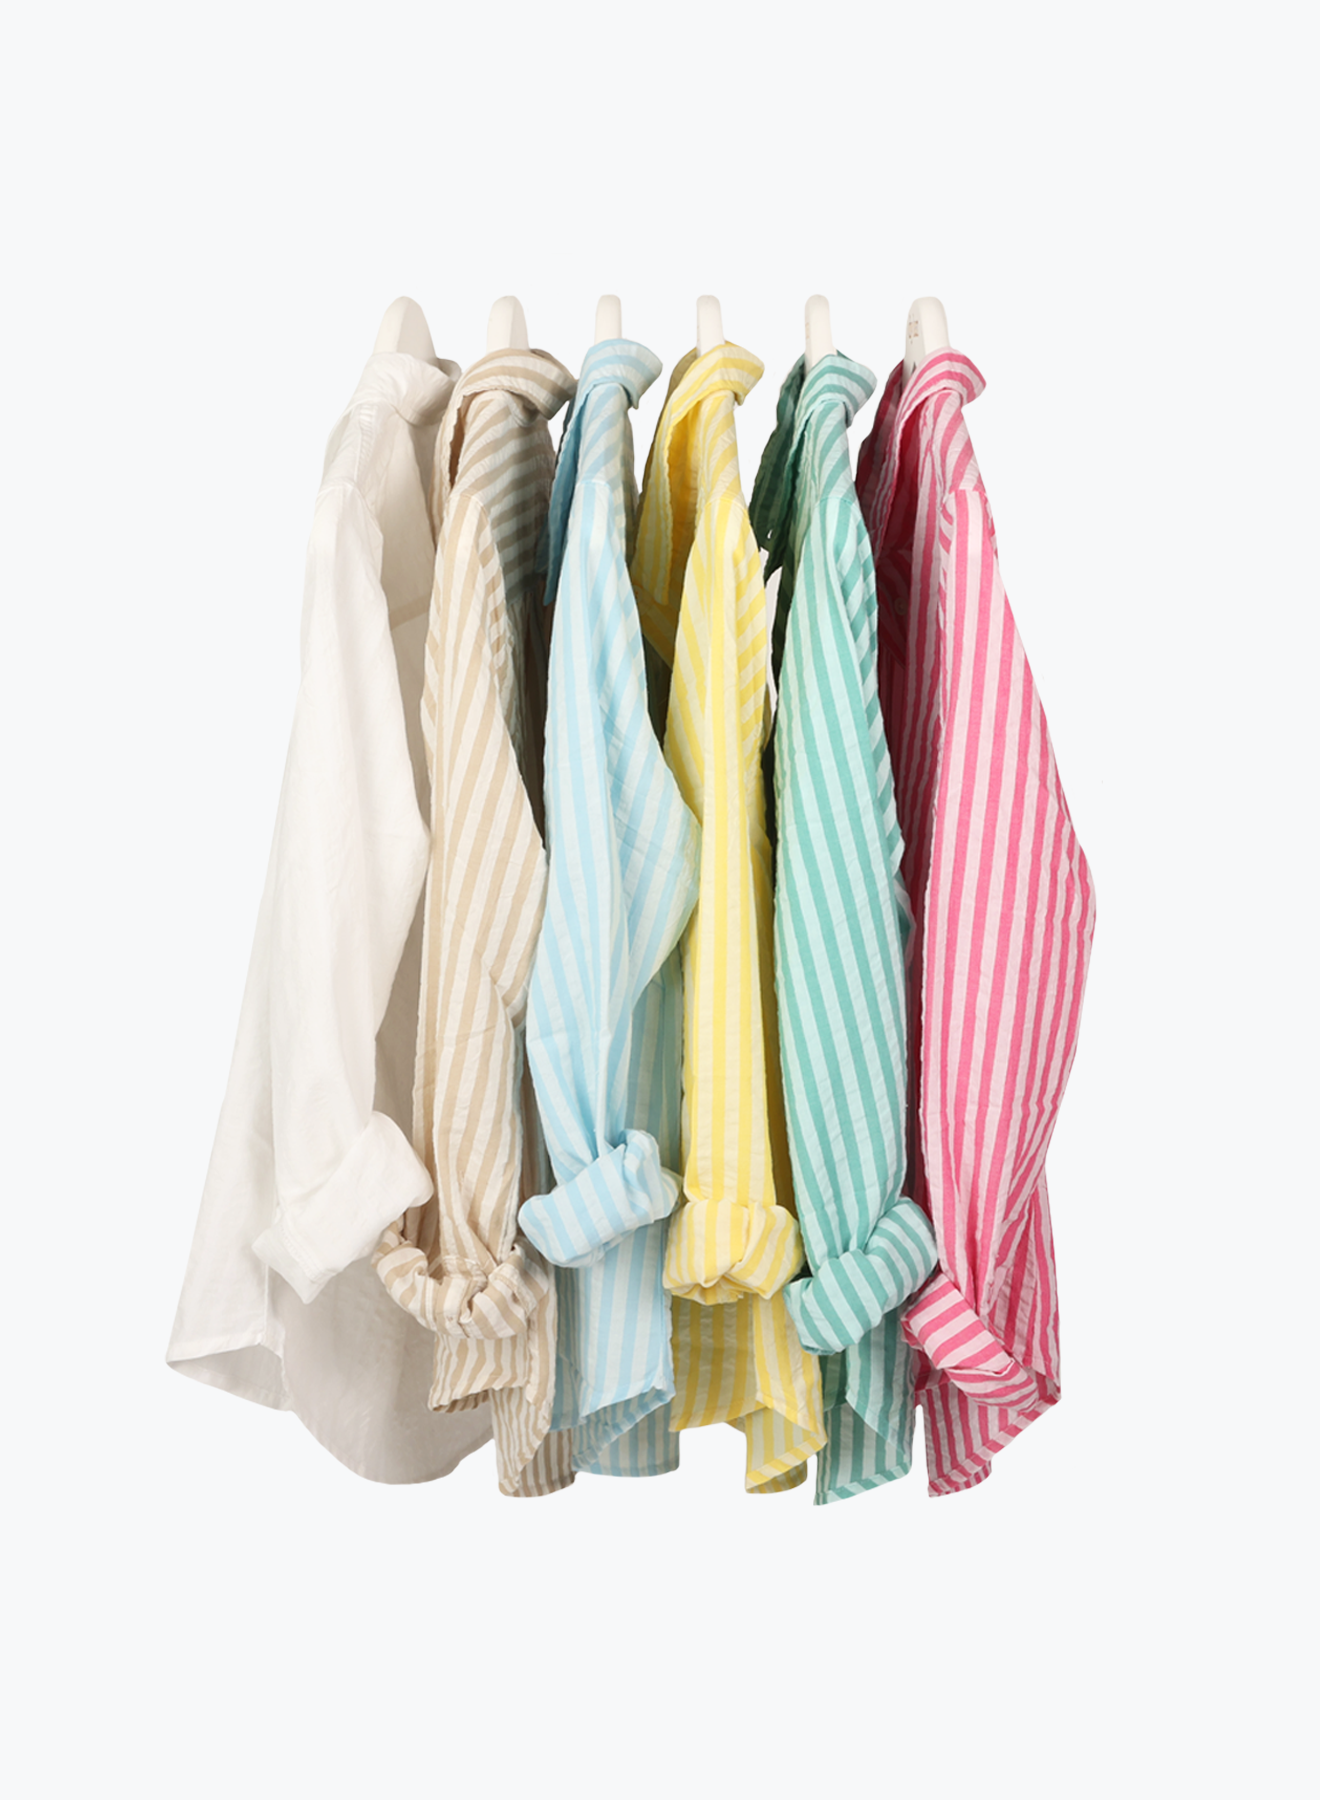 Taylor Long Sleeve Stripe Shirt in khaki by Dylan